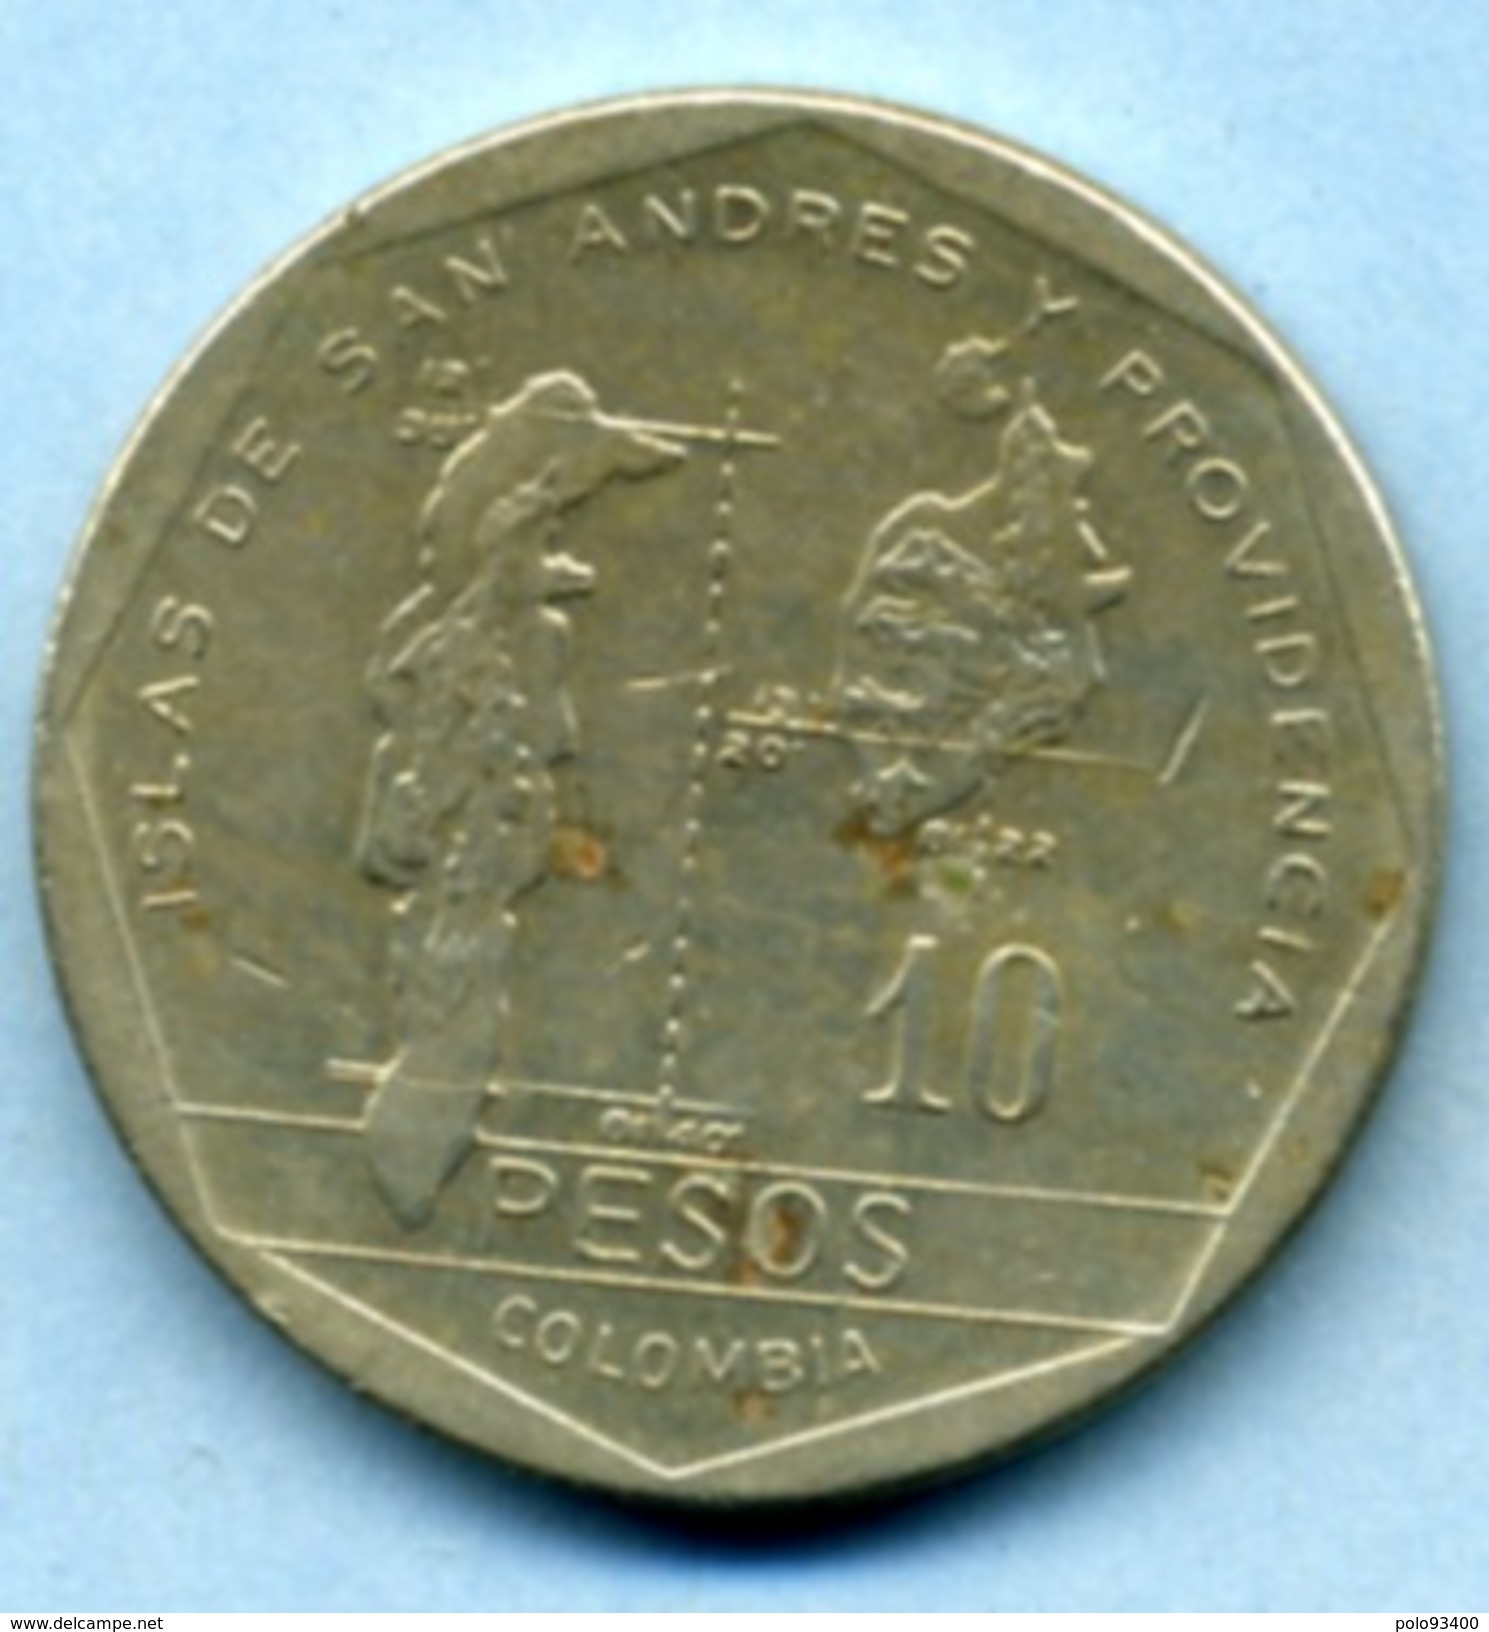 1985  10 PESOS - Colombia